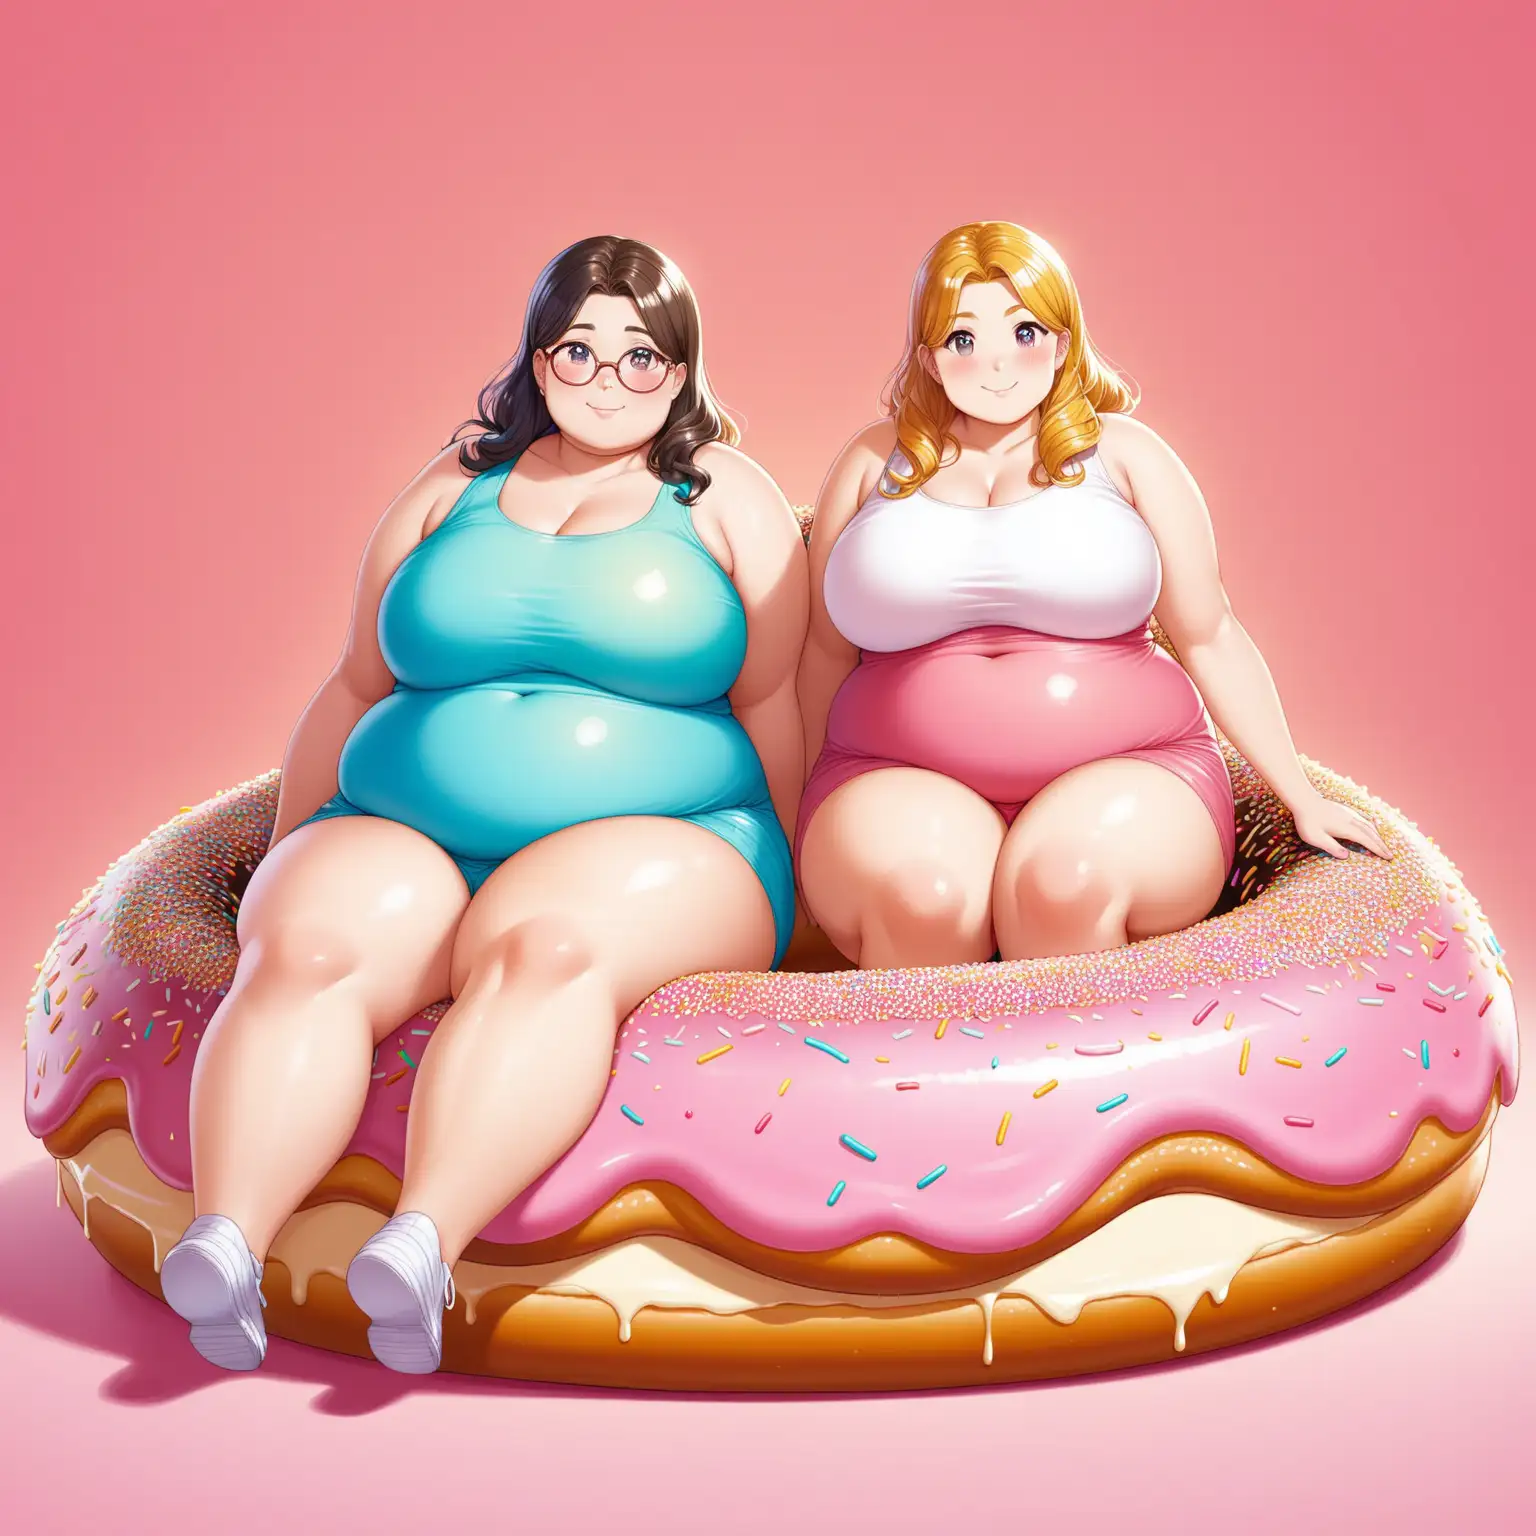 Two Plump Women Relaxing on an Oversized Donut